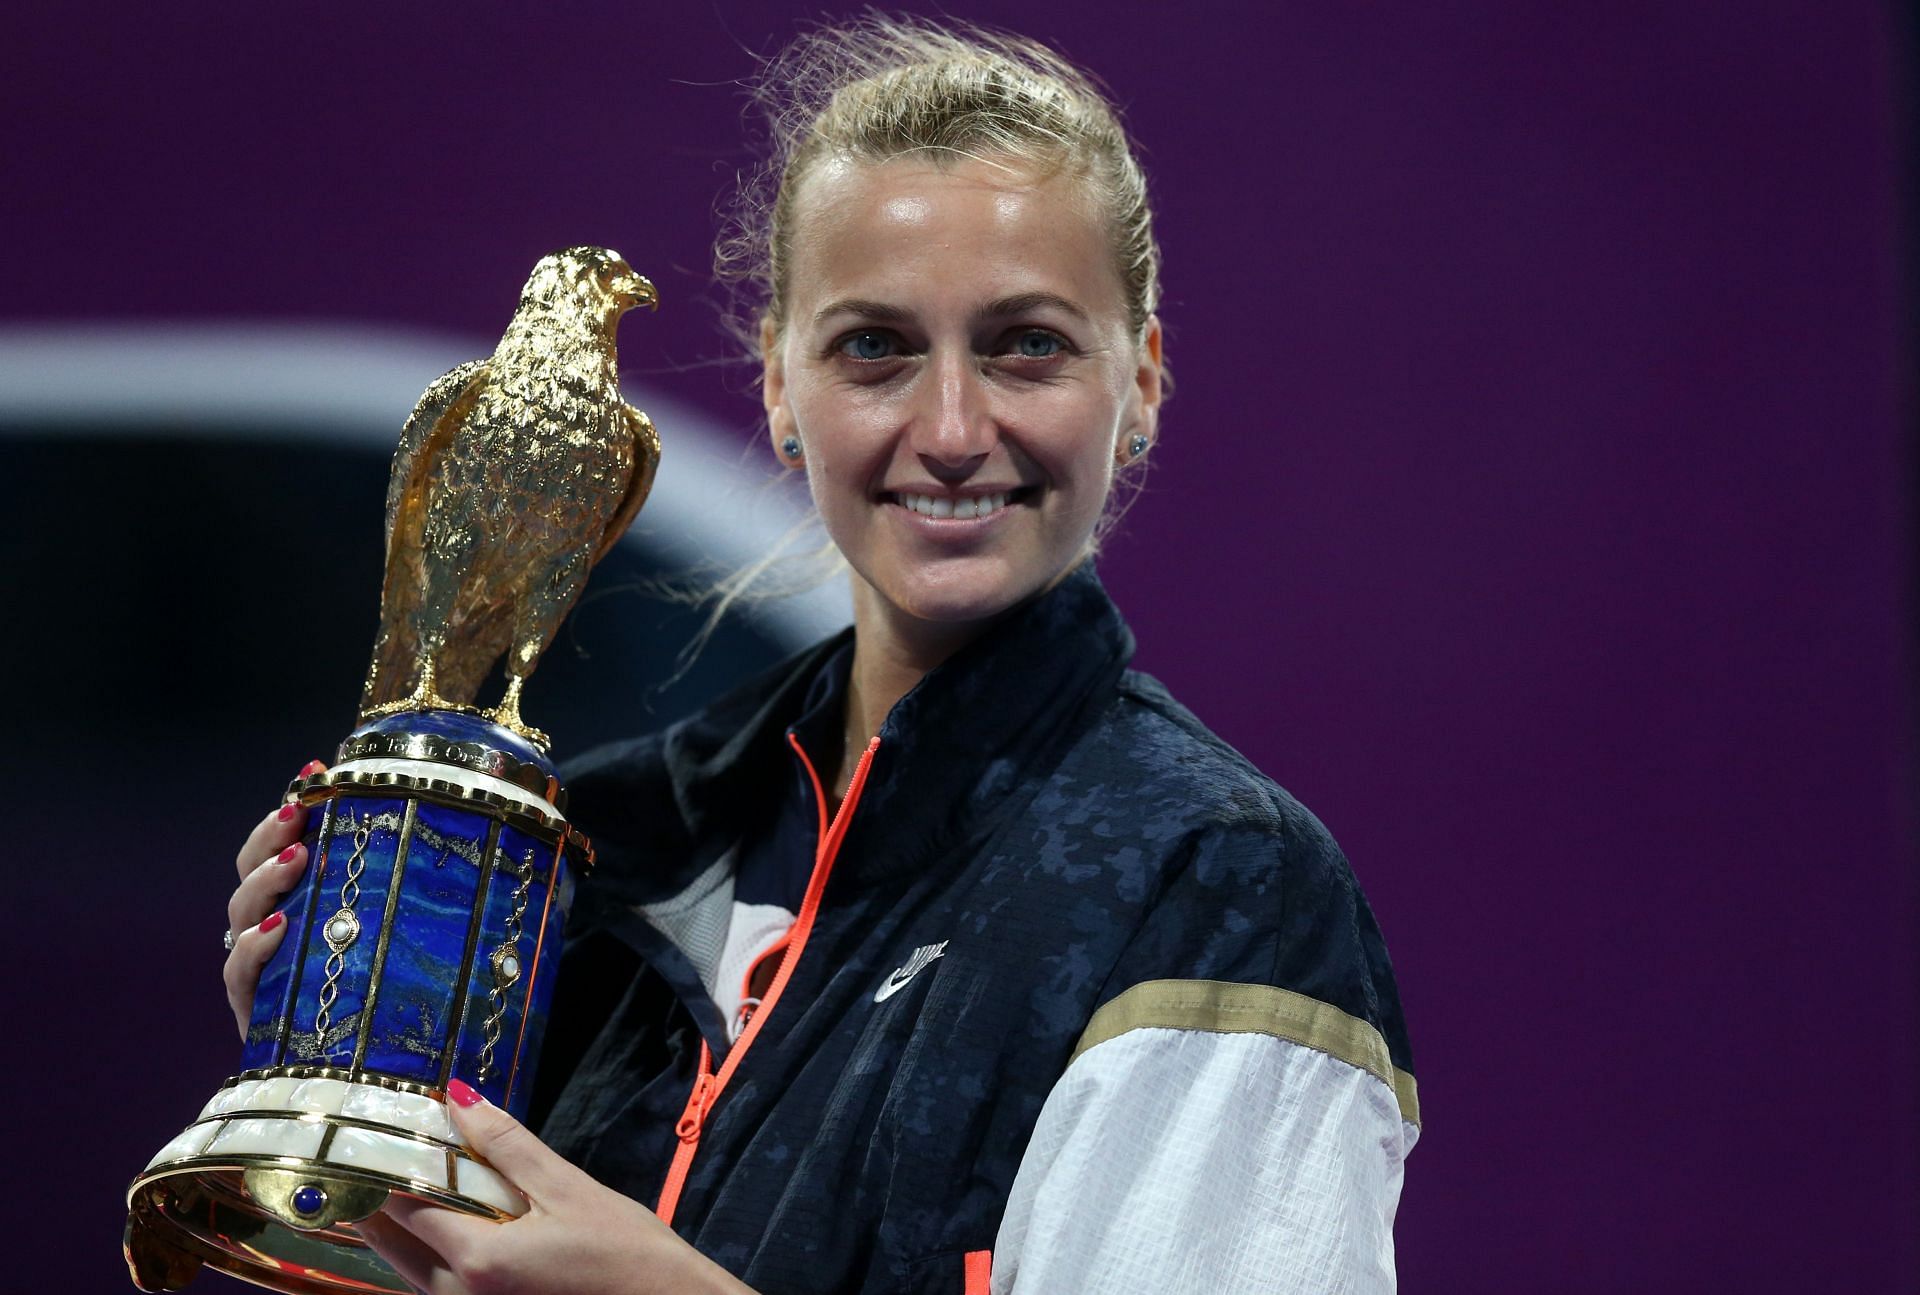 Petra Kvitova is the defending champion at the Qatar Open